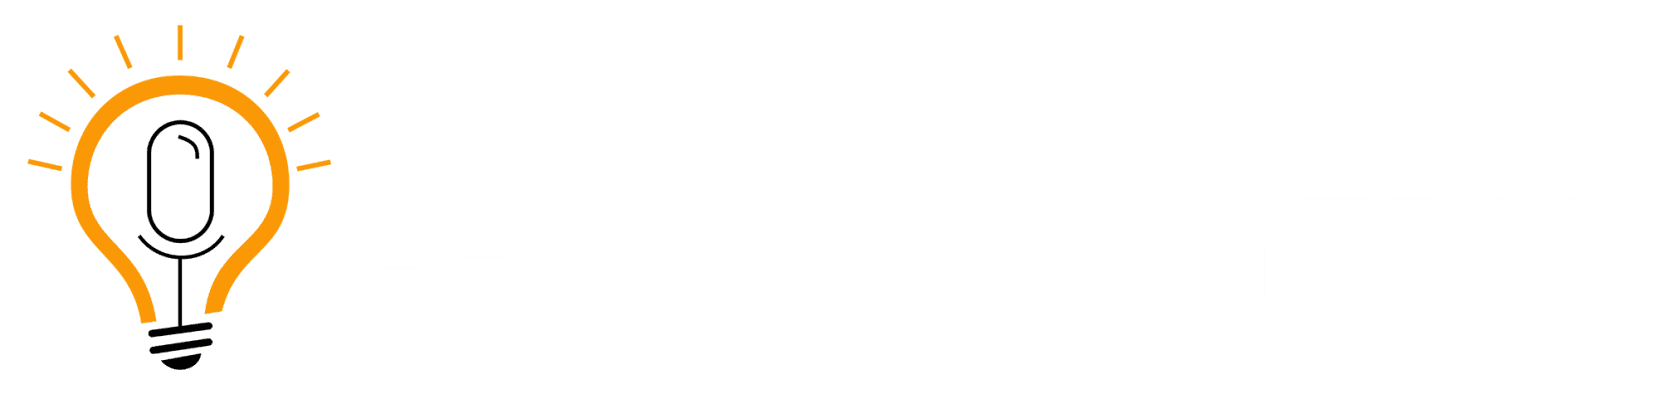 Lesaruss Inverse Logo